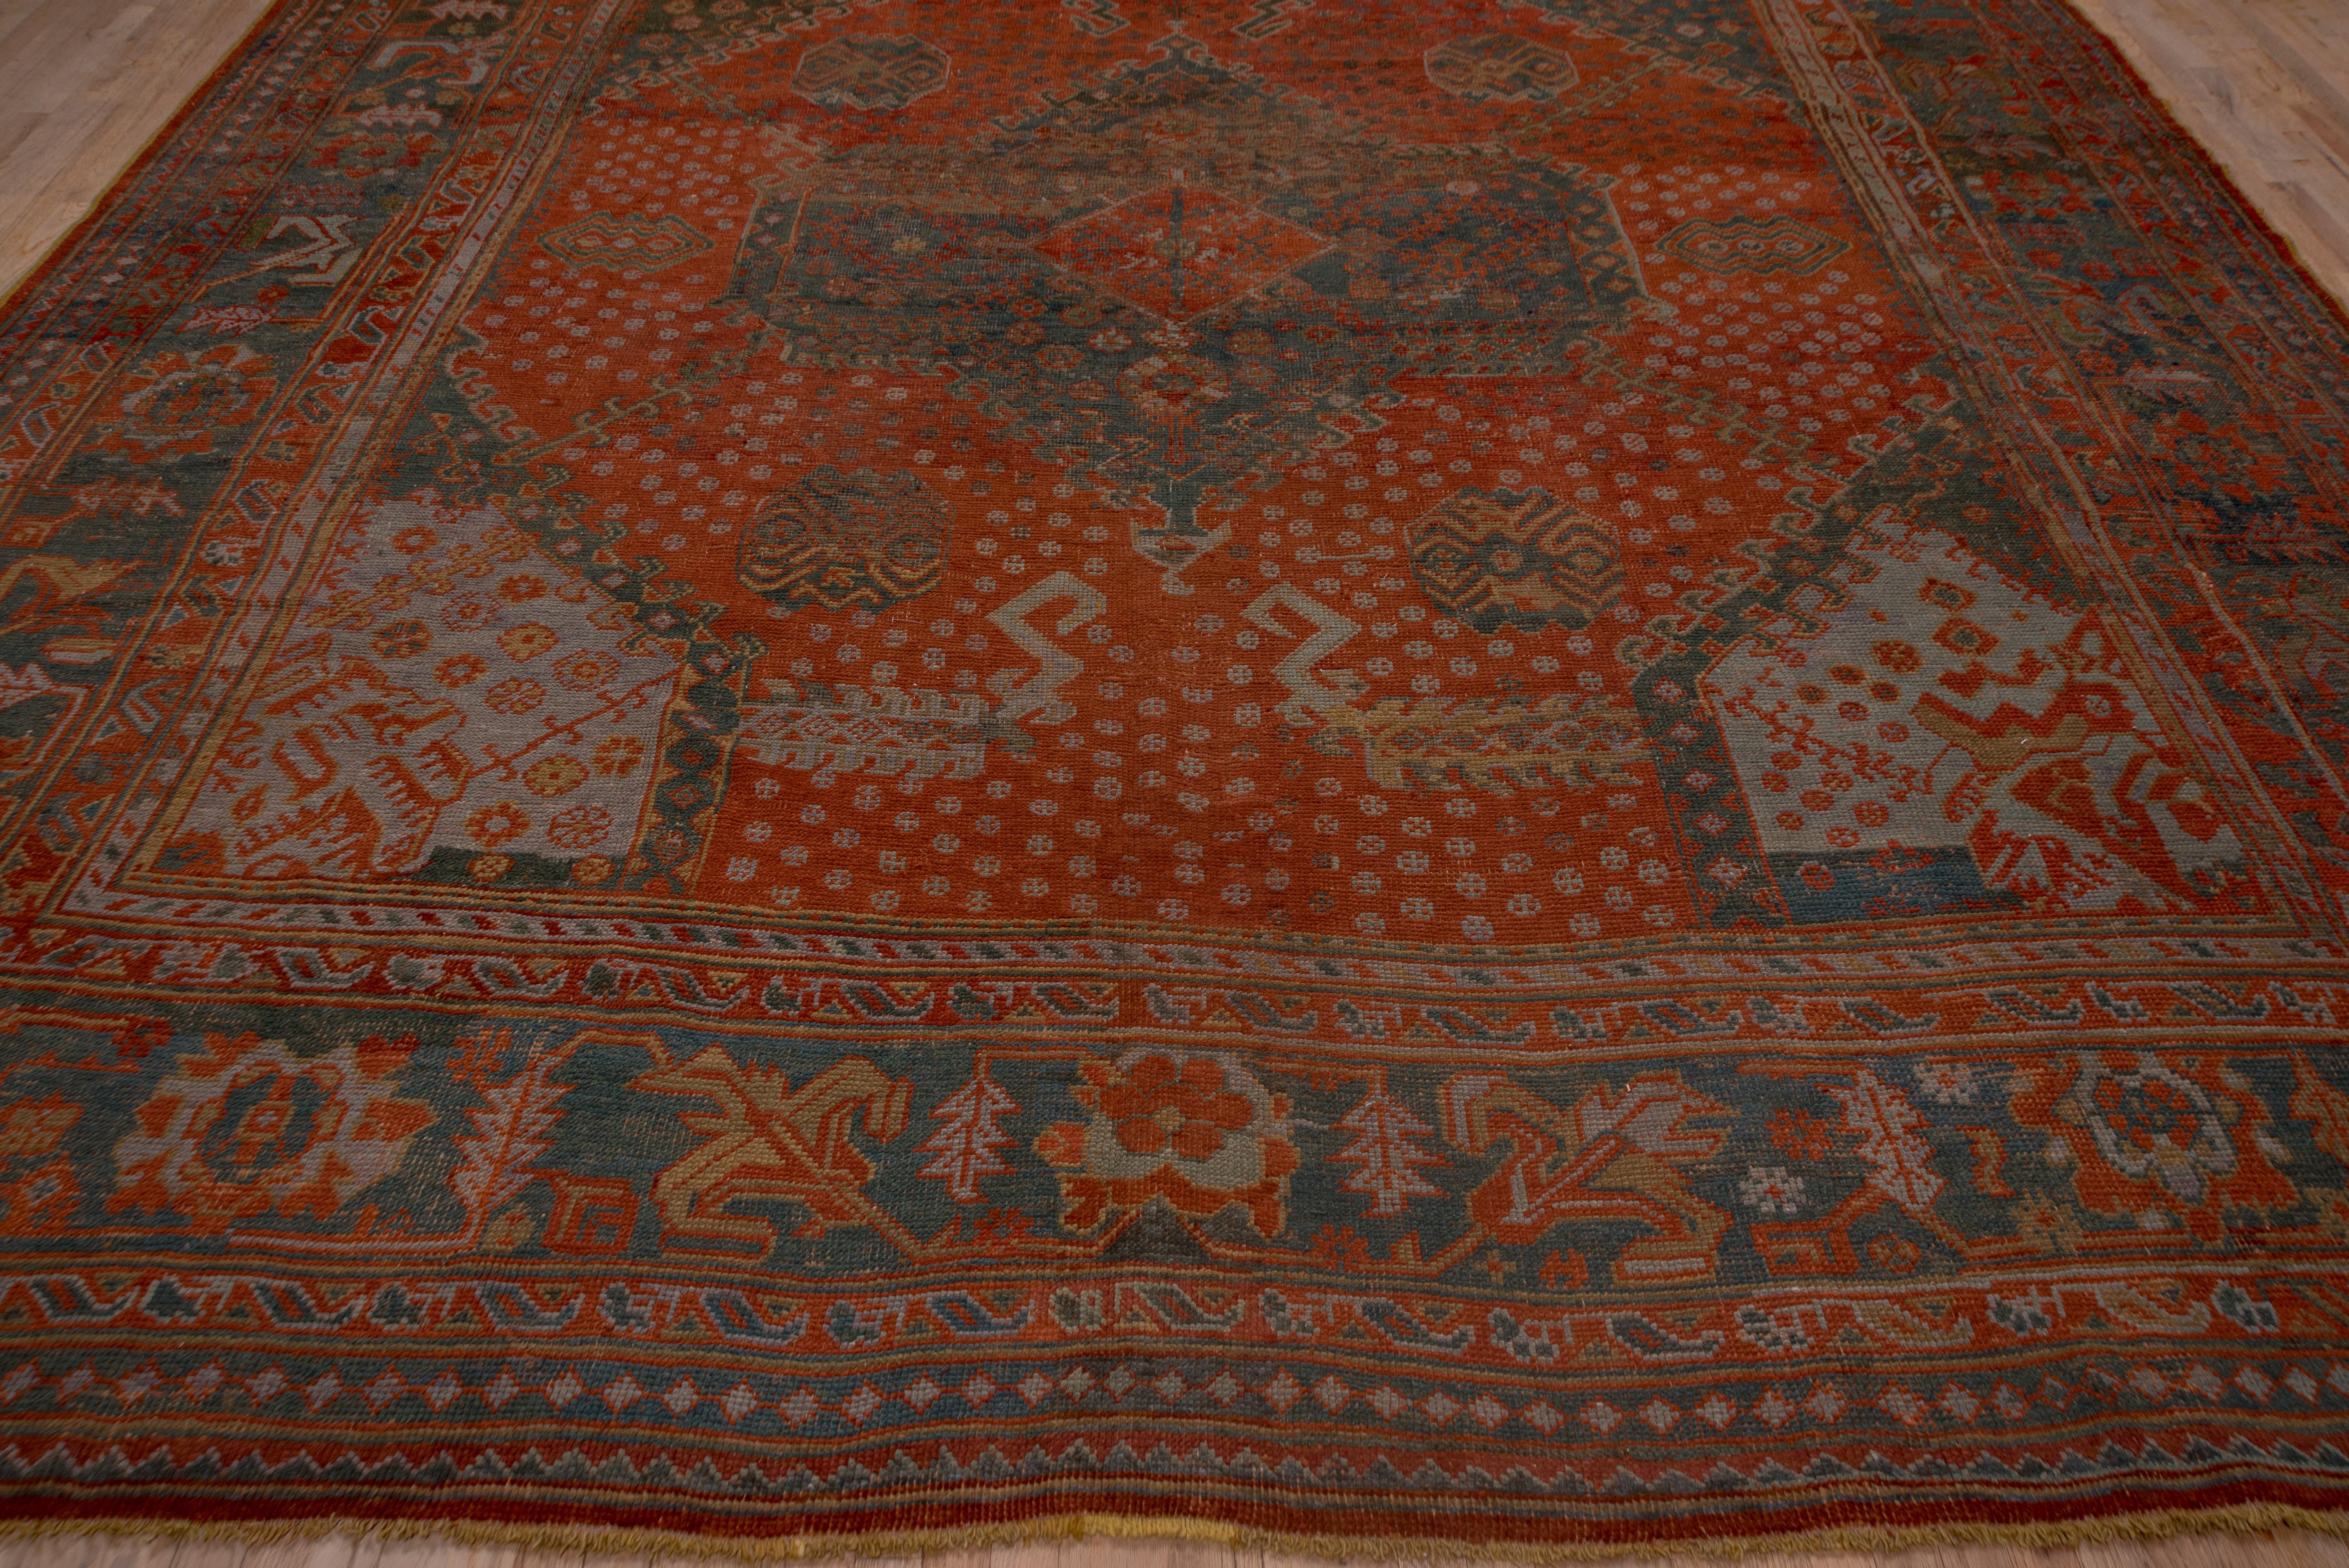 Early 20th Century Antique Turkish Oushak Large Carpet, Orange & Teal Palette, Circa 1920s For Sale